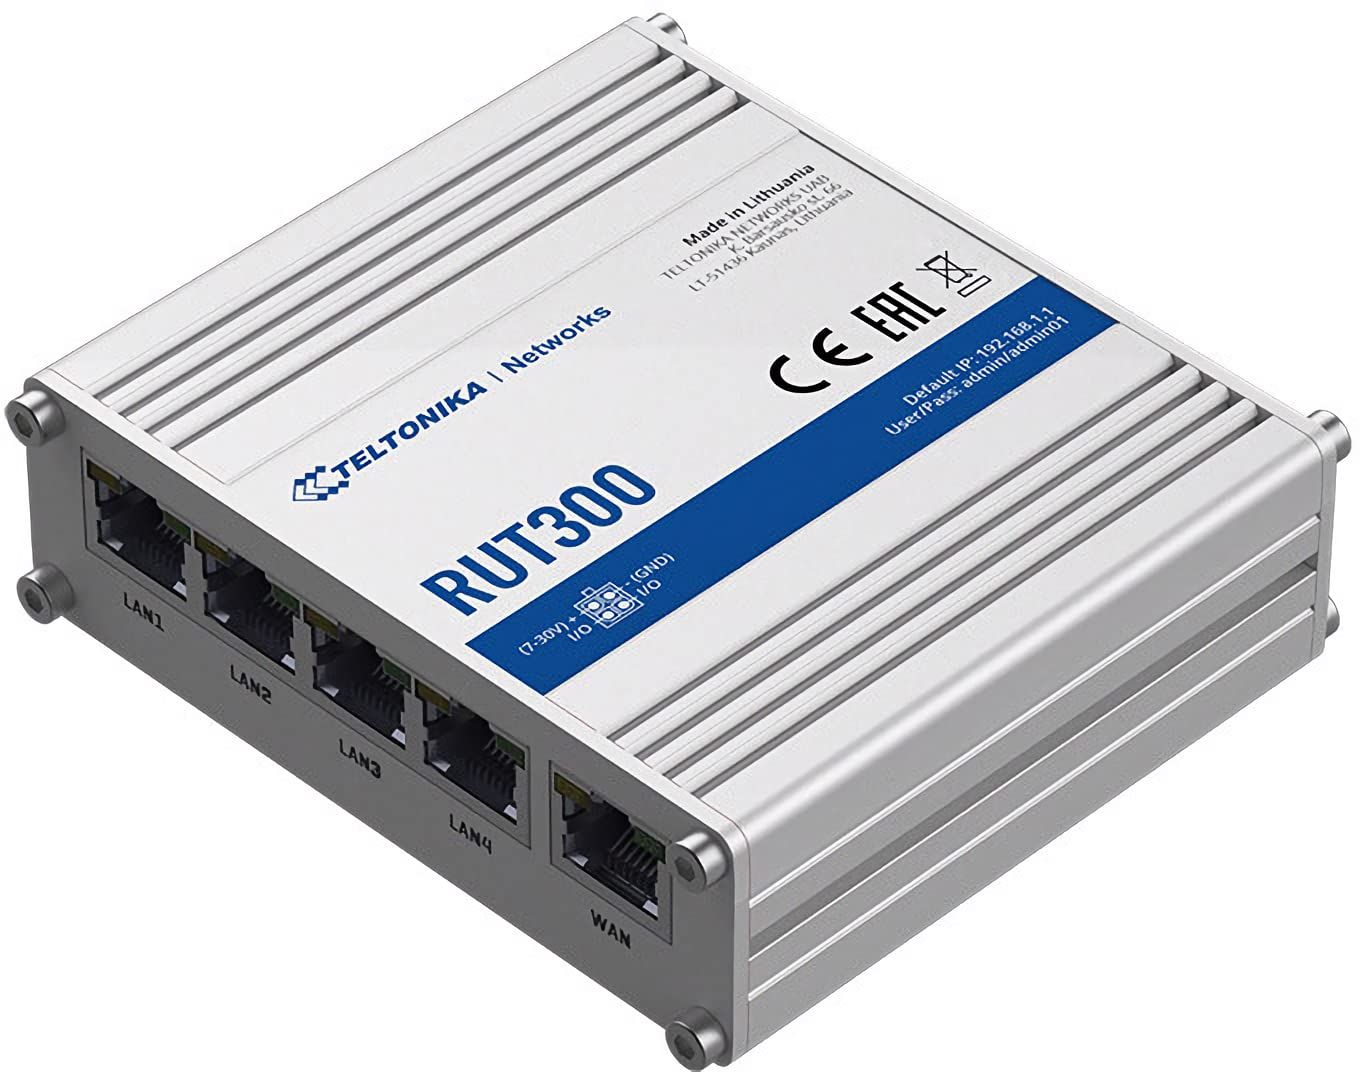 Teltonika RUT300 Industrial Ethernet Router_1